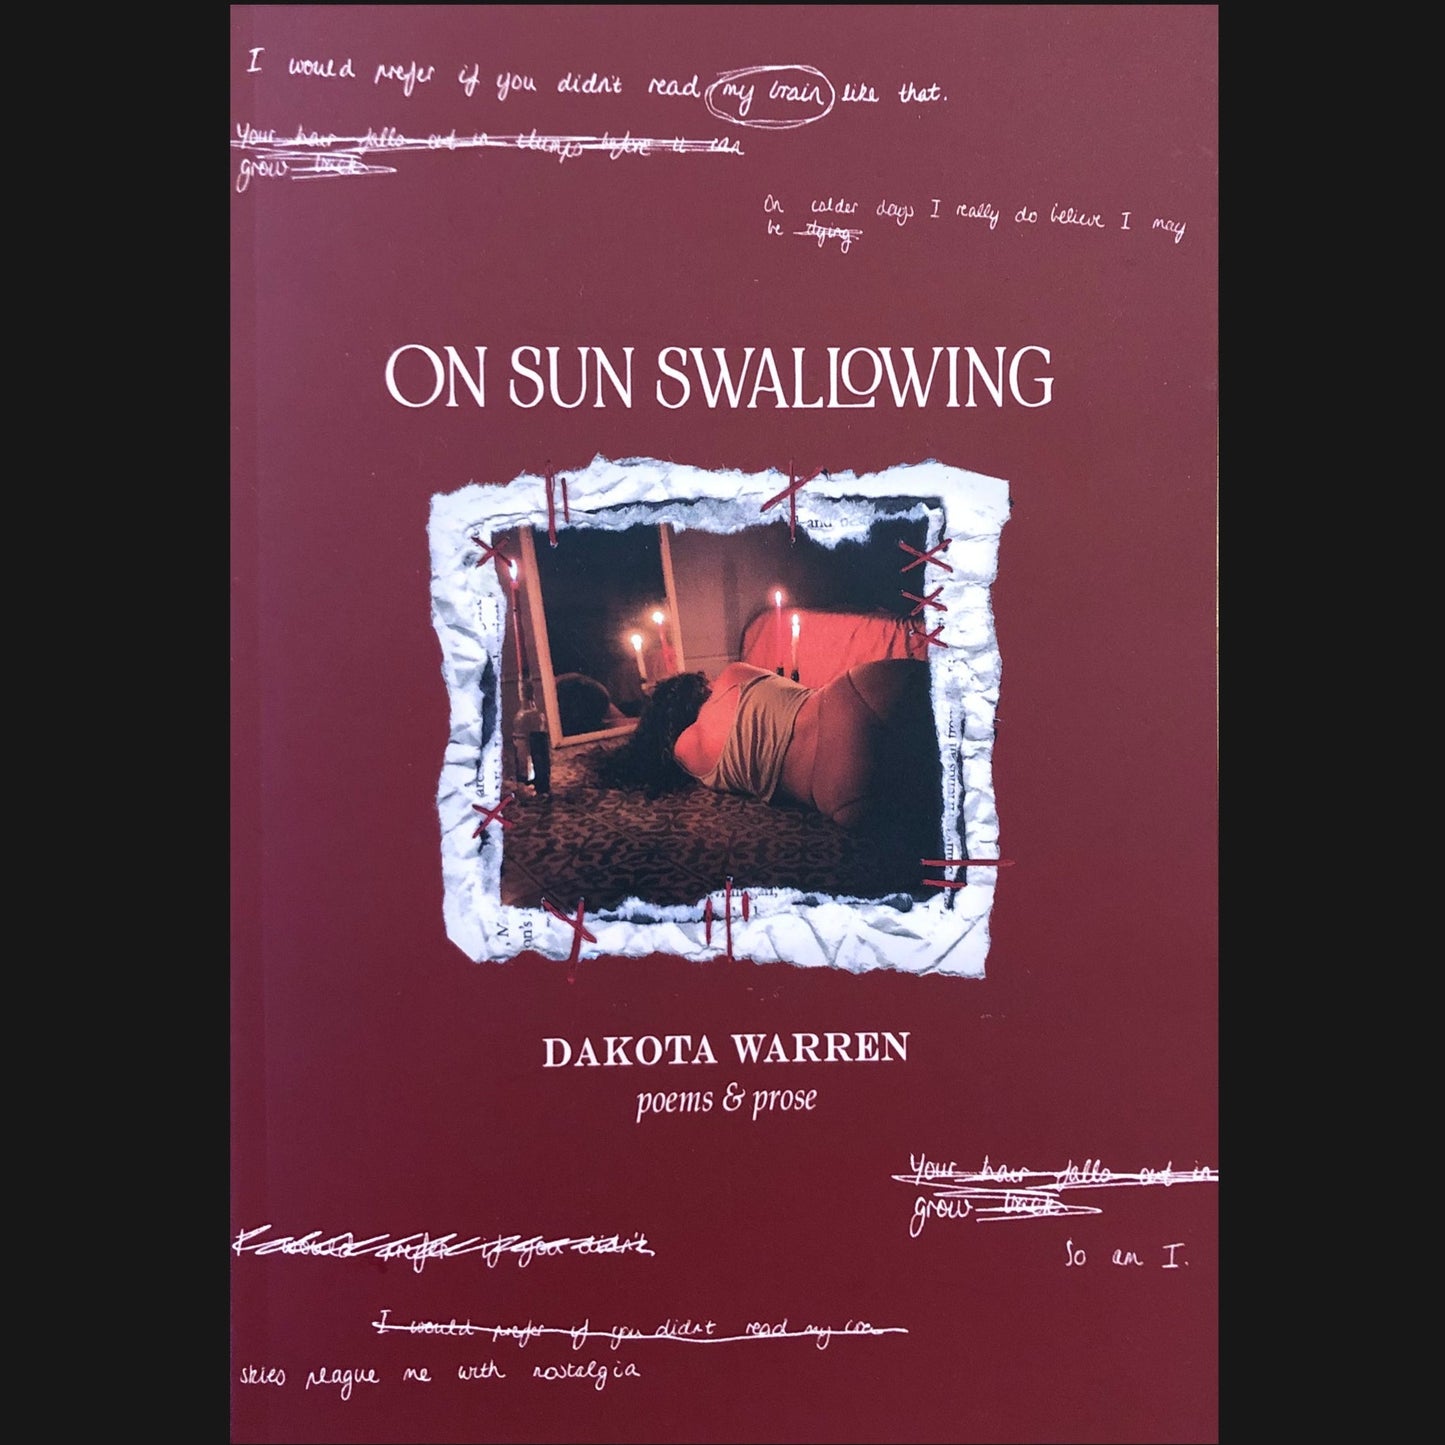 DAKOTA WARREN - "ON SUN SWALLOWING" BOOK